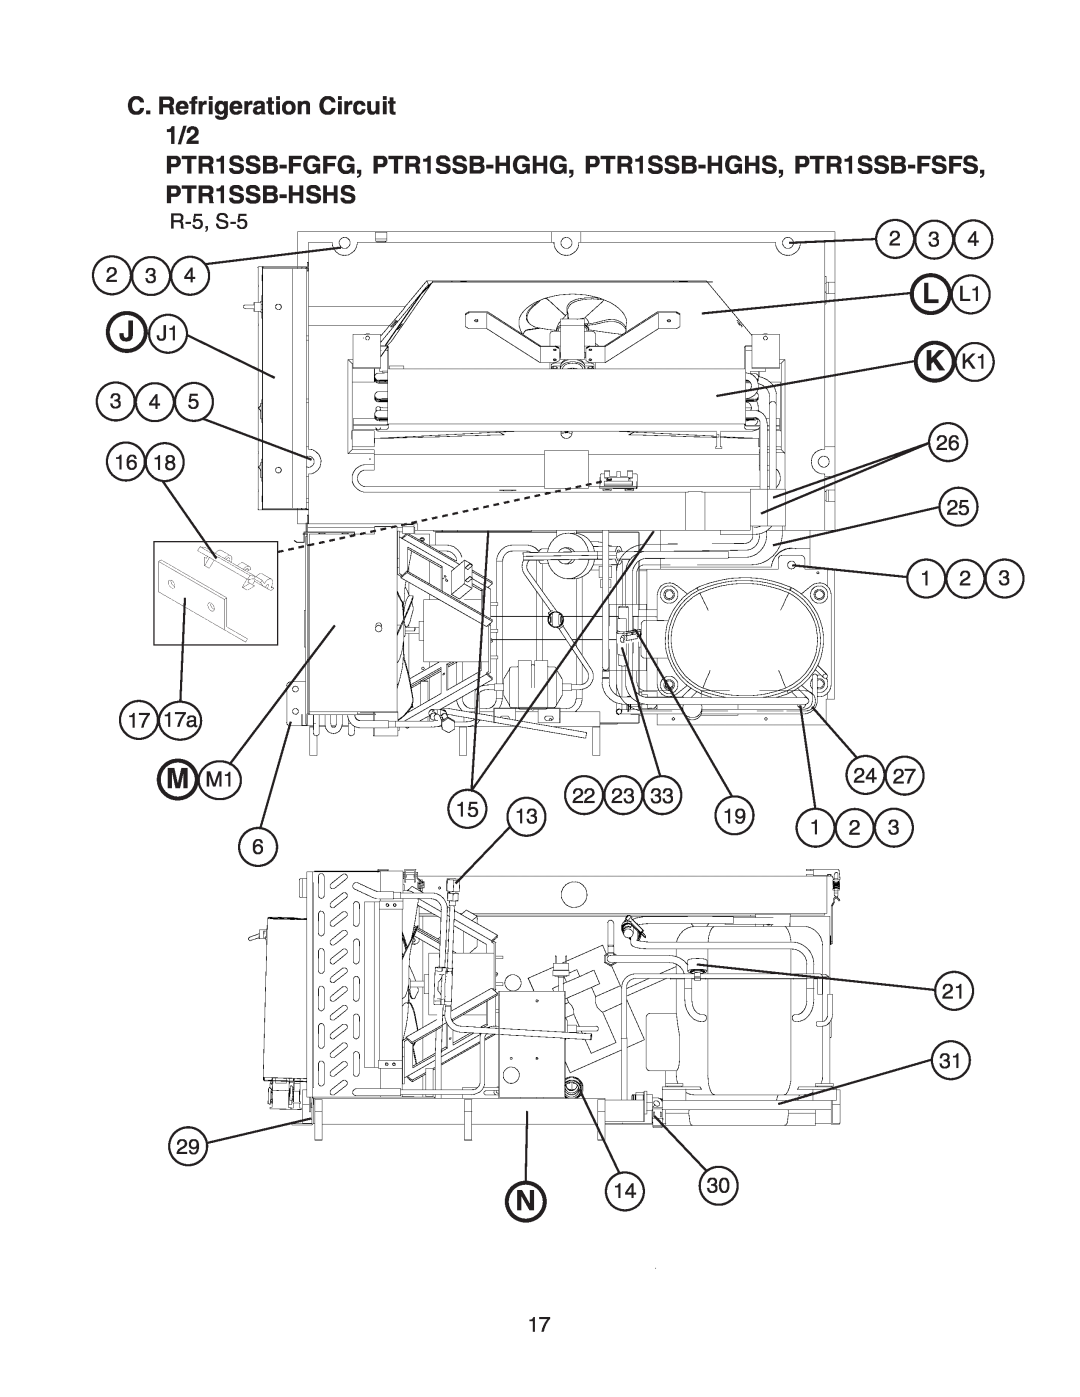 Hoshizaki PTR1SSB-HSHS, PTR1SSB-HGHG, PTR1SSB-FSFS, PTR1SSB-HGHS, PTR1SSB-FGFG manual M M1, C. Refrigeration Circuit 